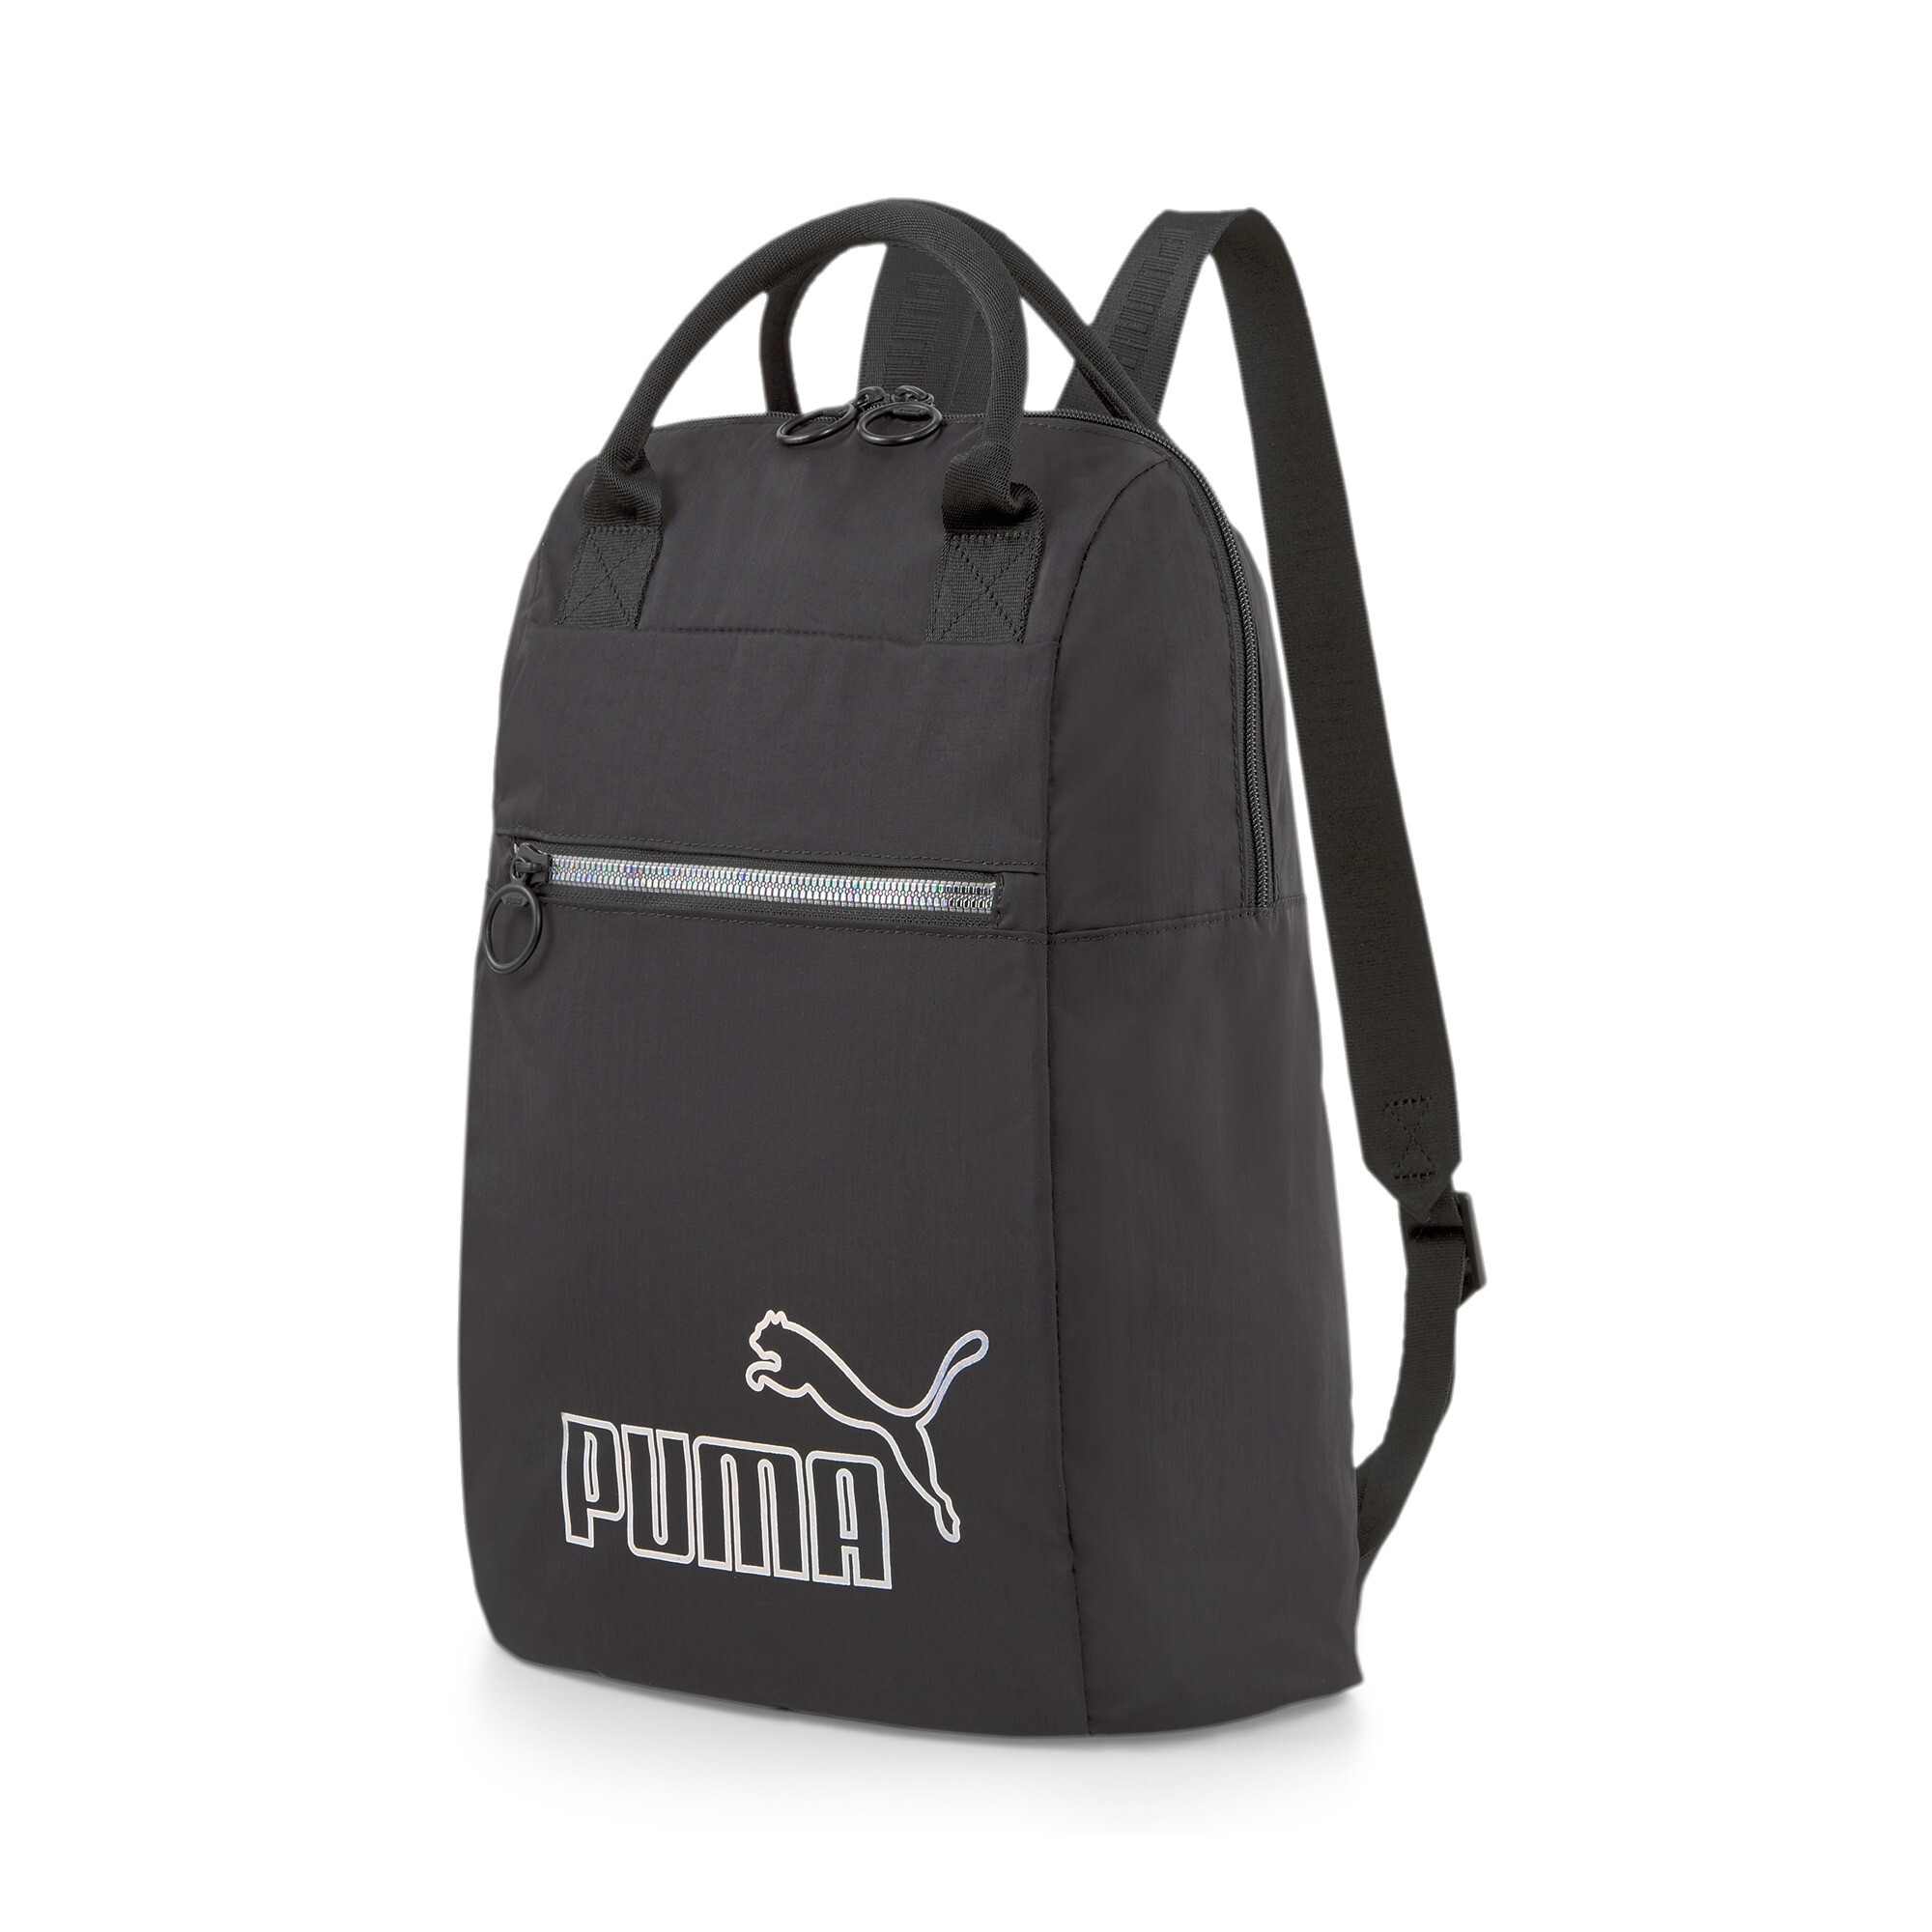 Women's Puma College's Backpack, Black, Accessories